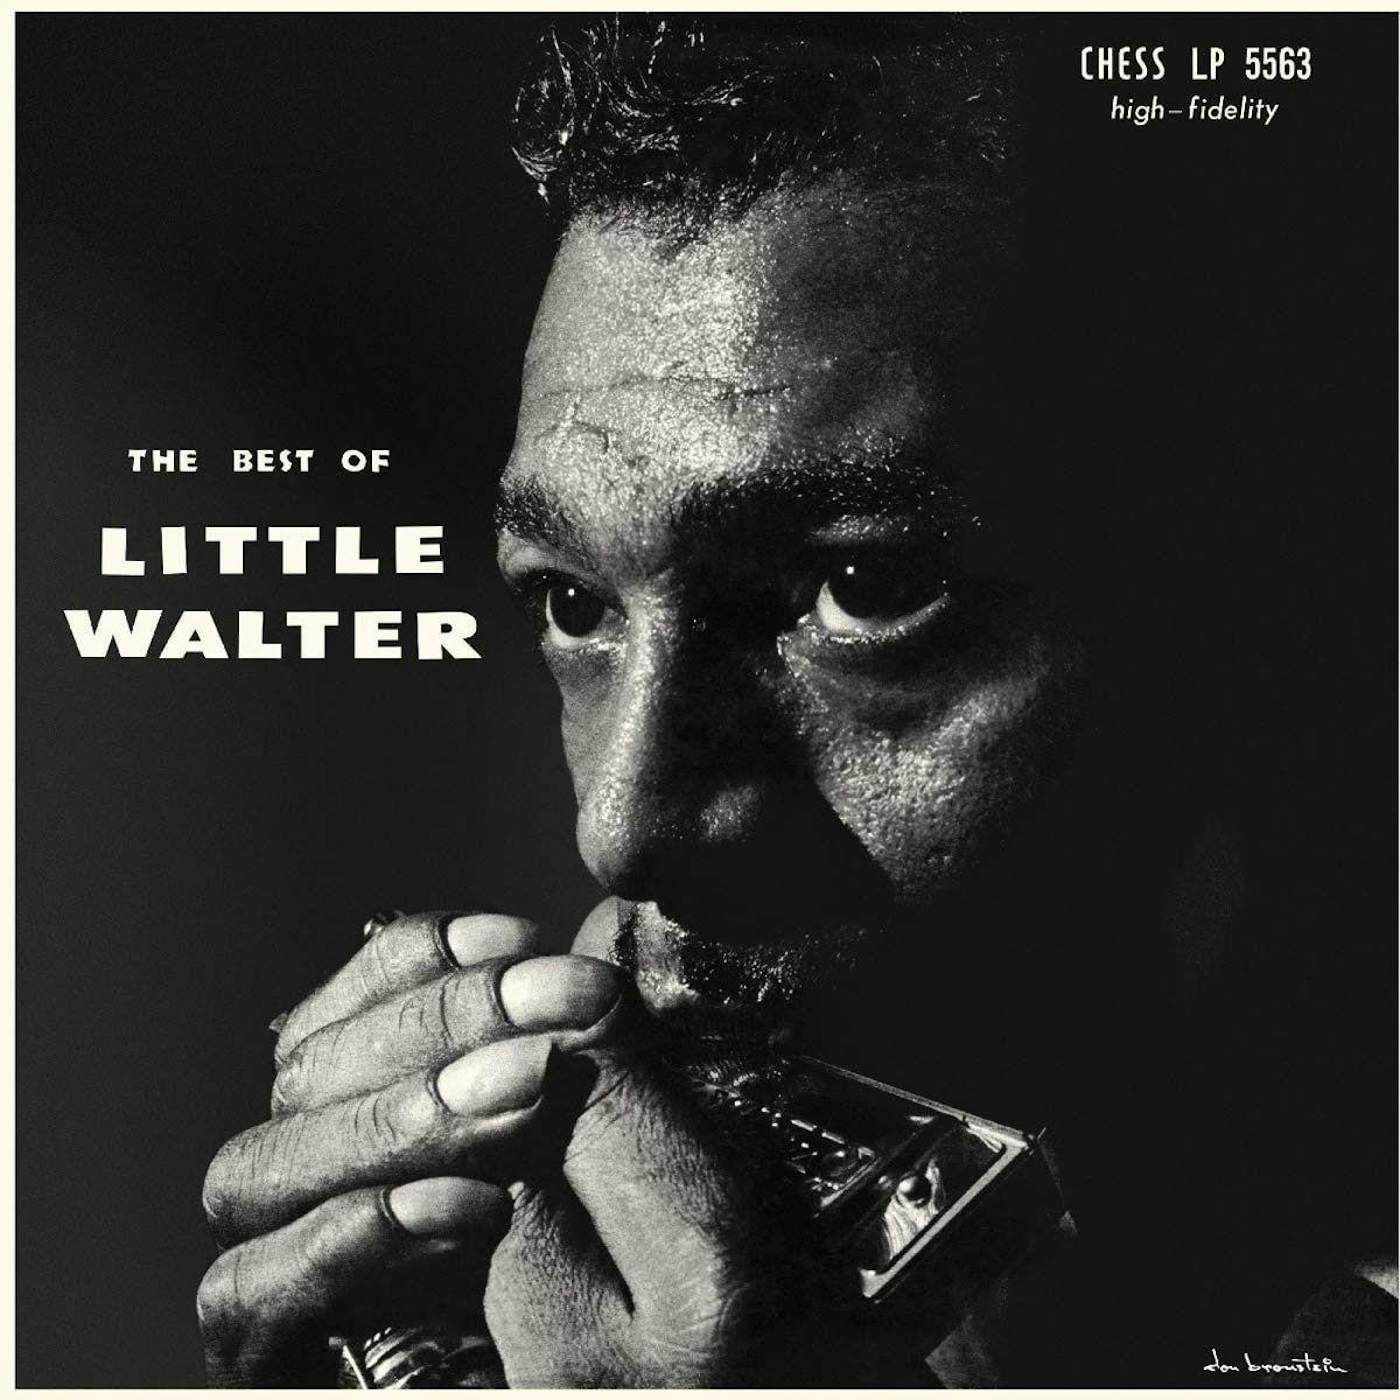 The Best Of Little Walter Vinyl Record